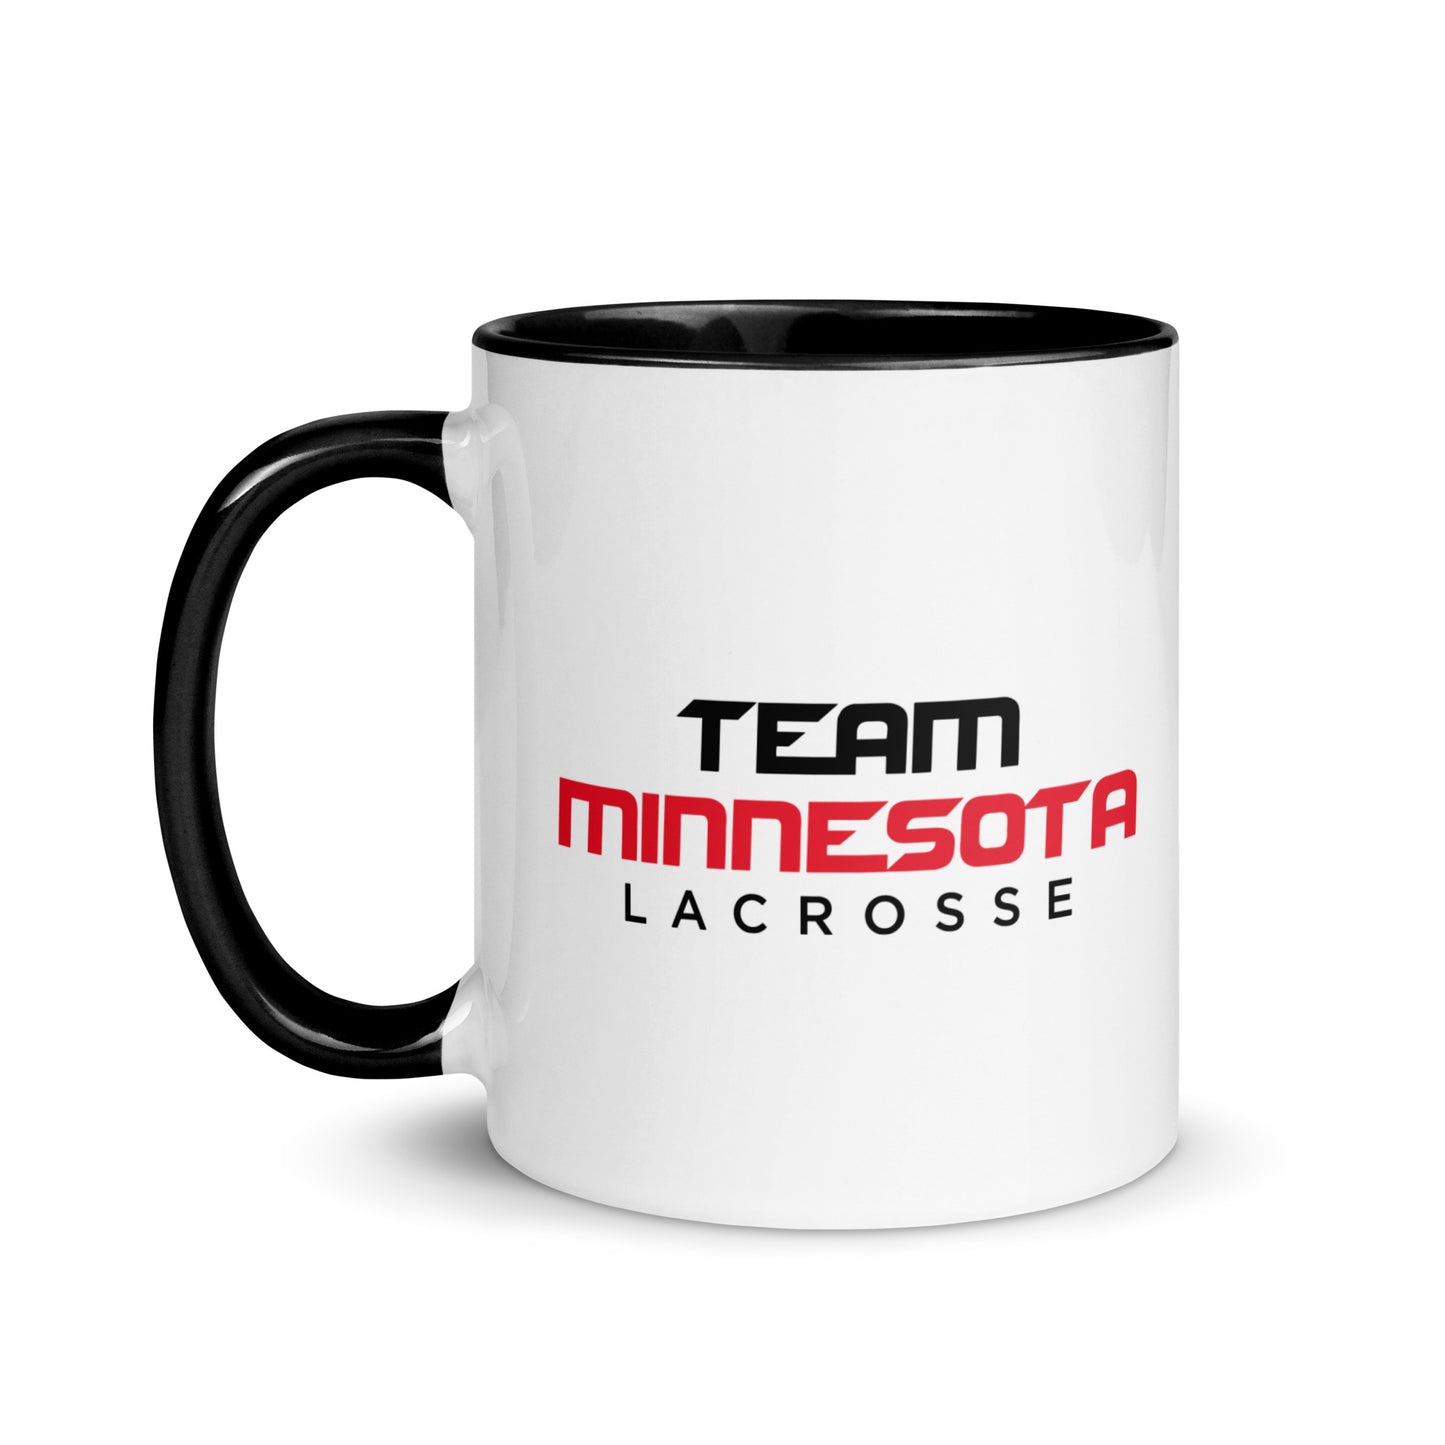 Team Minnesota - Mug with Color Inside